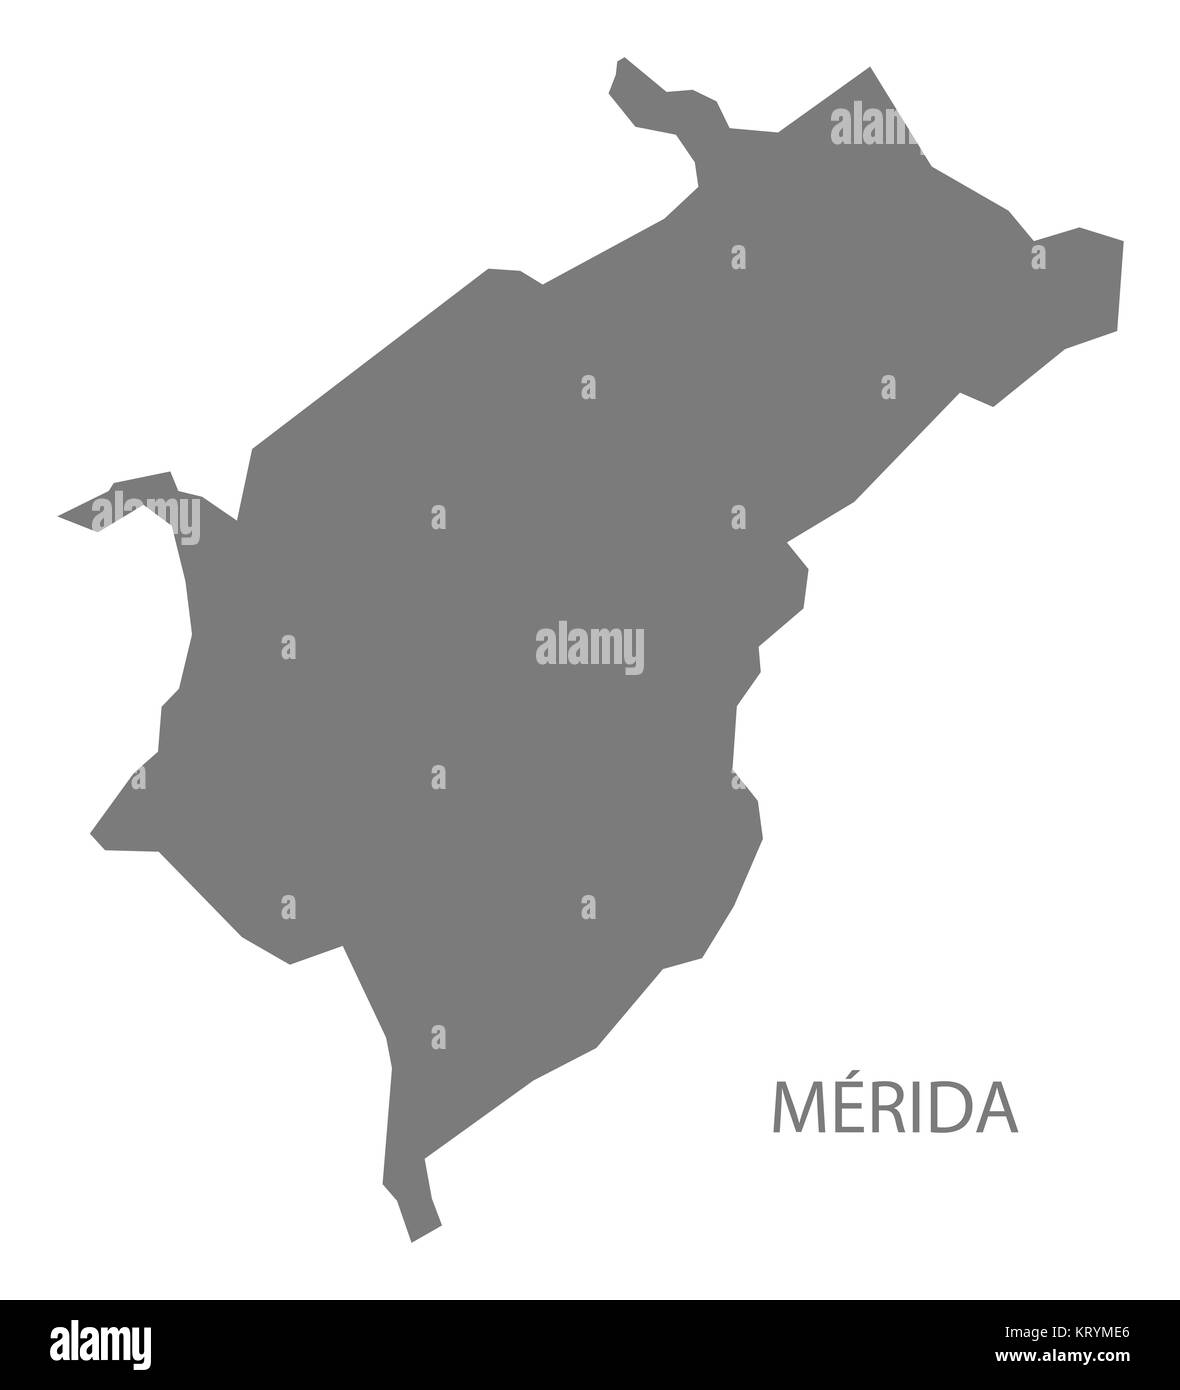 Merida Venezuela Map grey Stock Photo